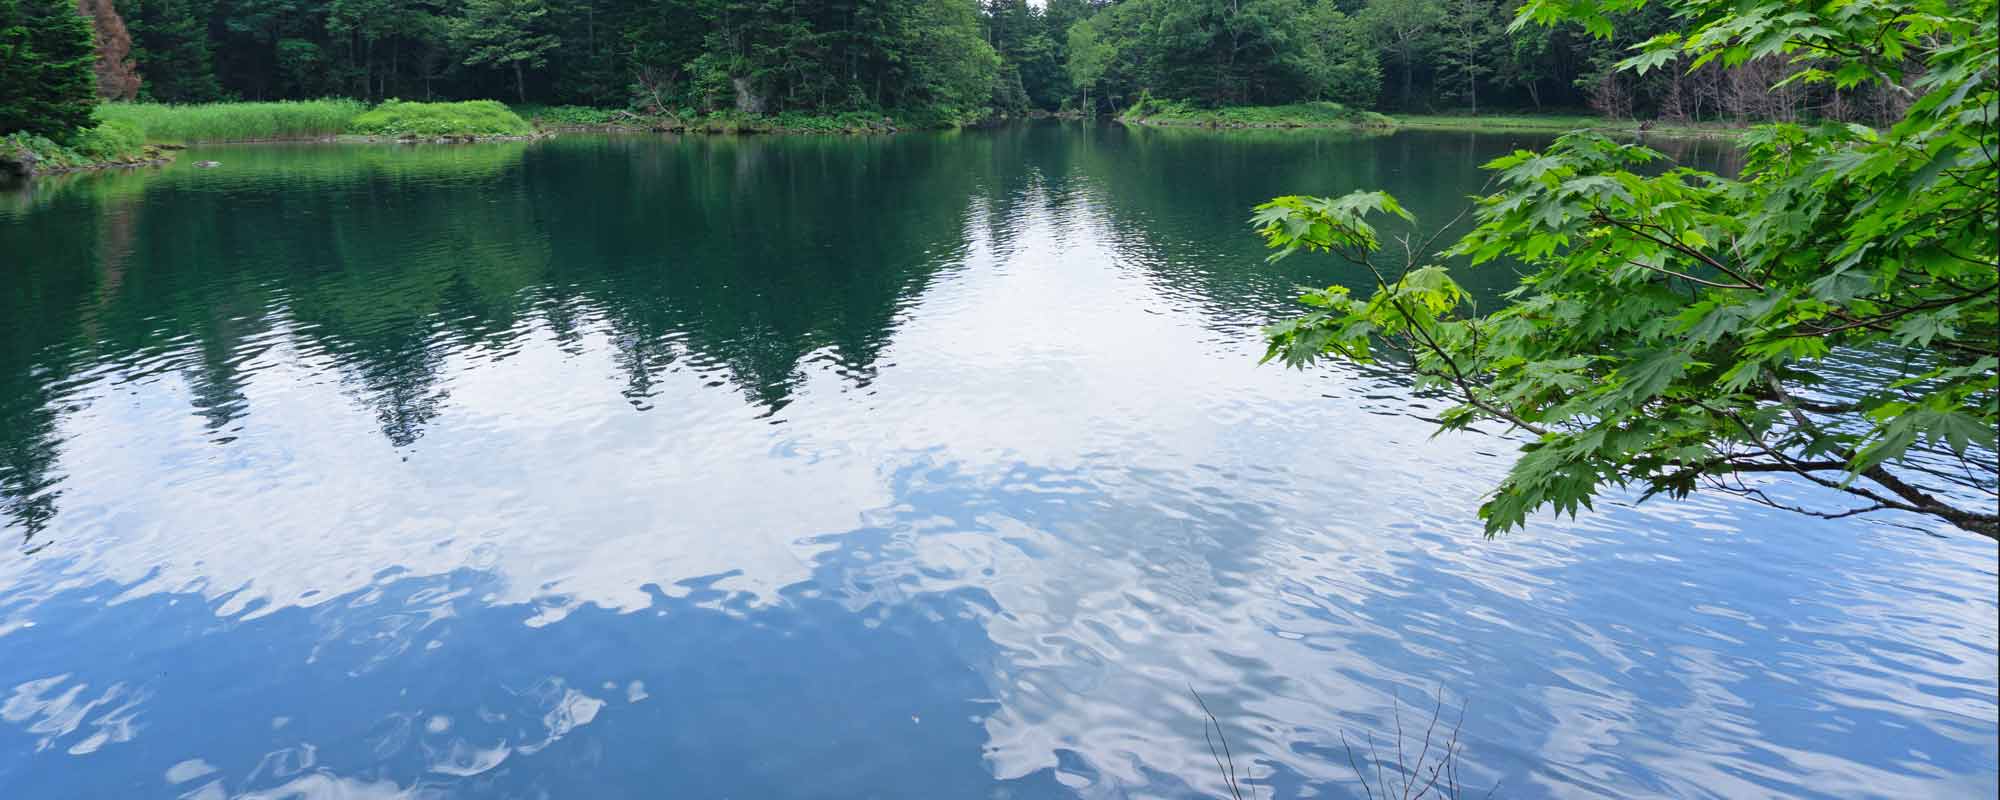 太郎湖